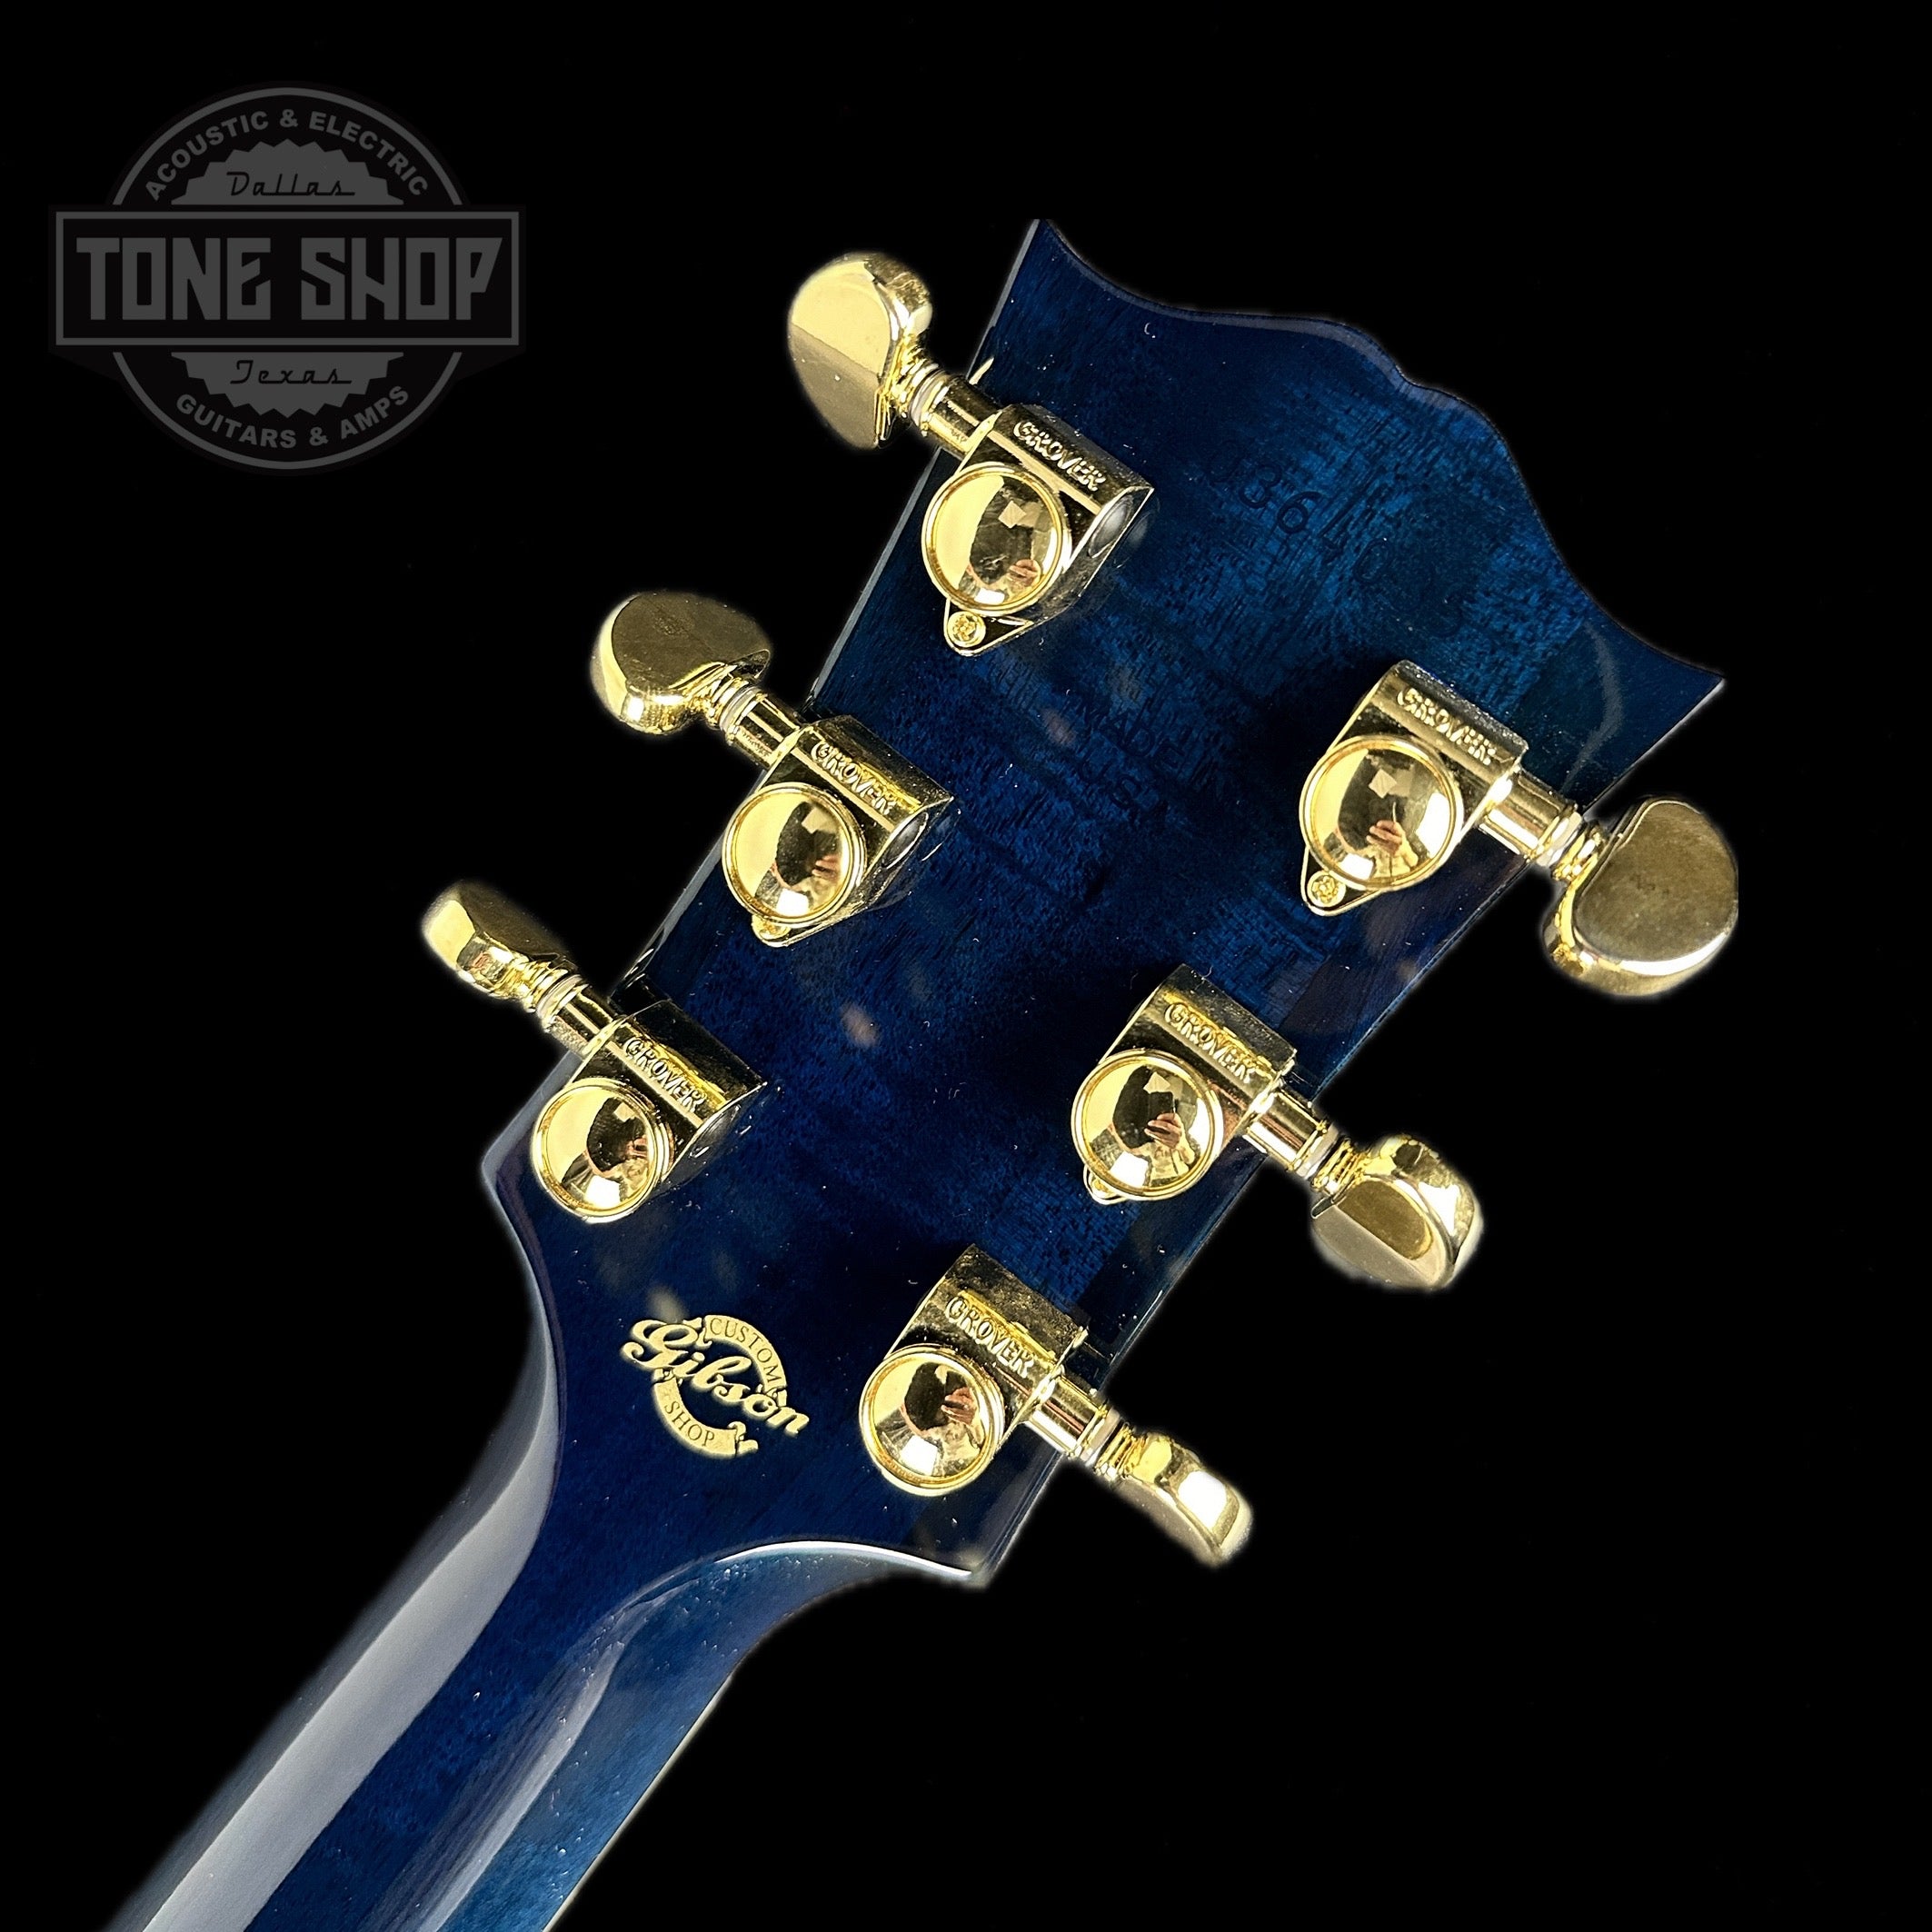 Gibson Custom Shop M2M SJ-200 Standard Viper Blue w/case